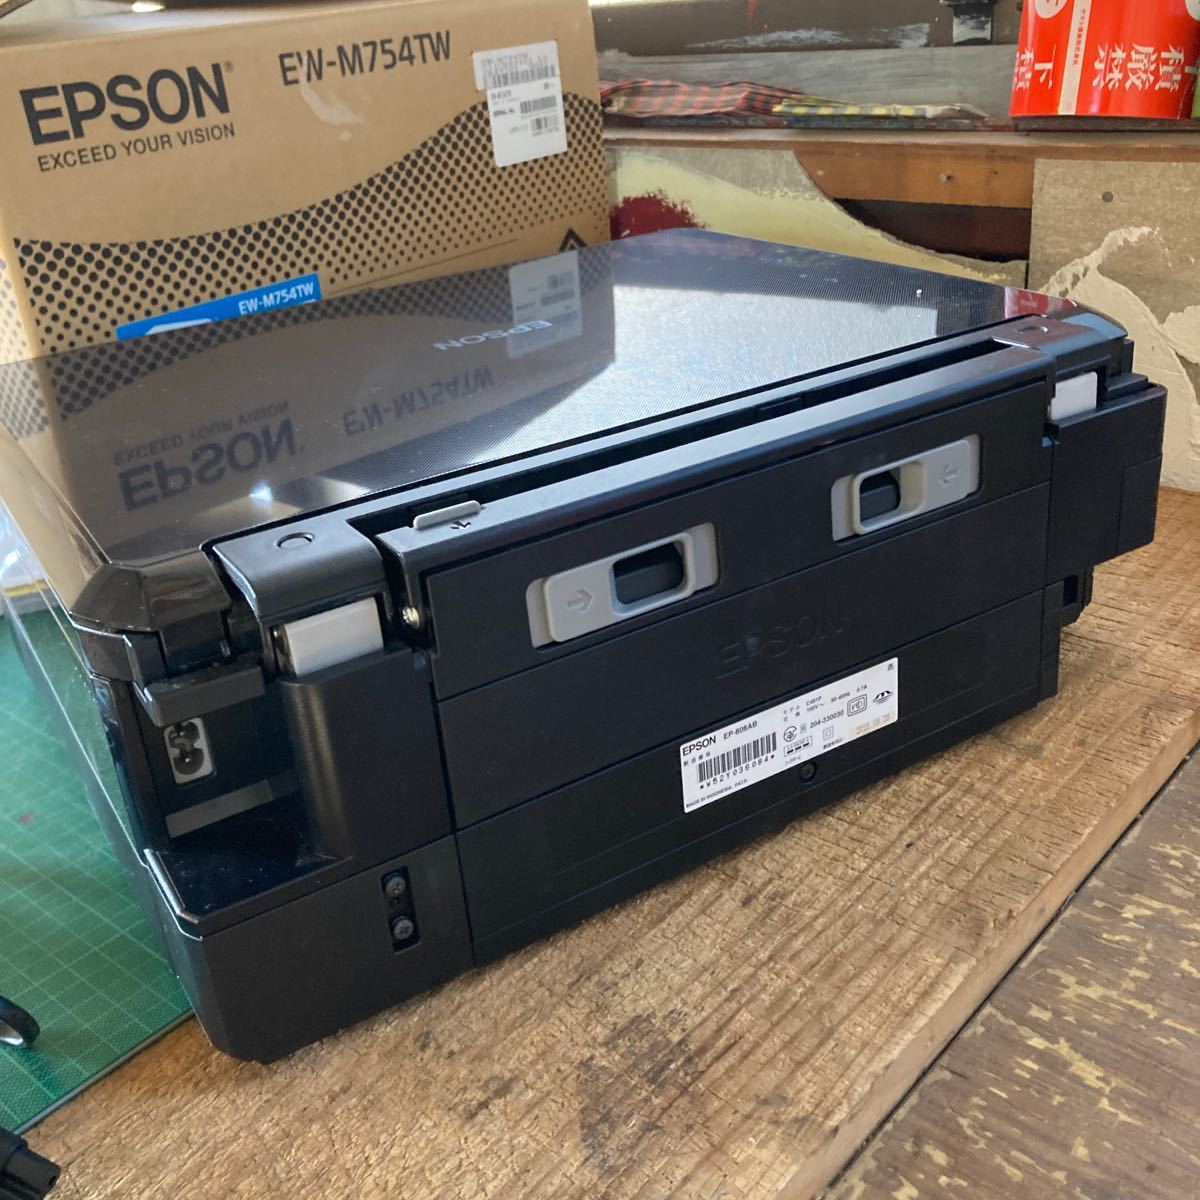 EPSON エプソン EP-808AB C491P インクジェット 複合機 説明書 箱付き 動作品 黒、黄色、赤インク切れ_画像6